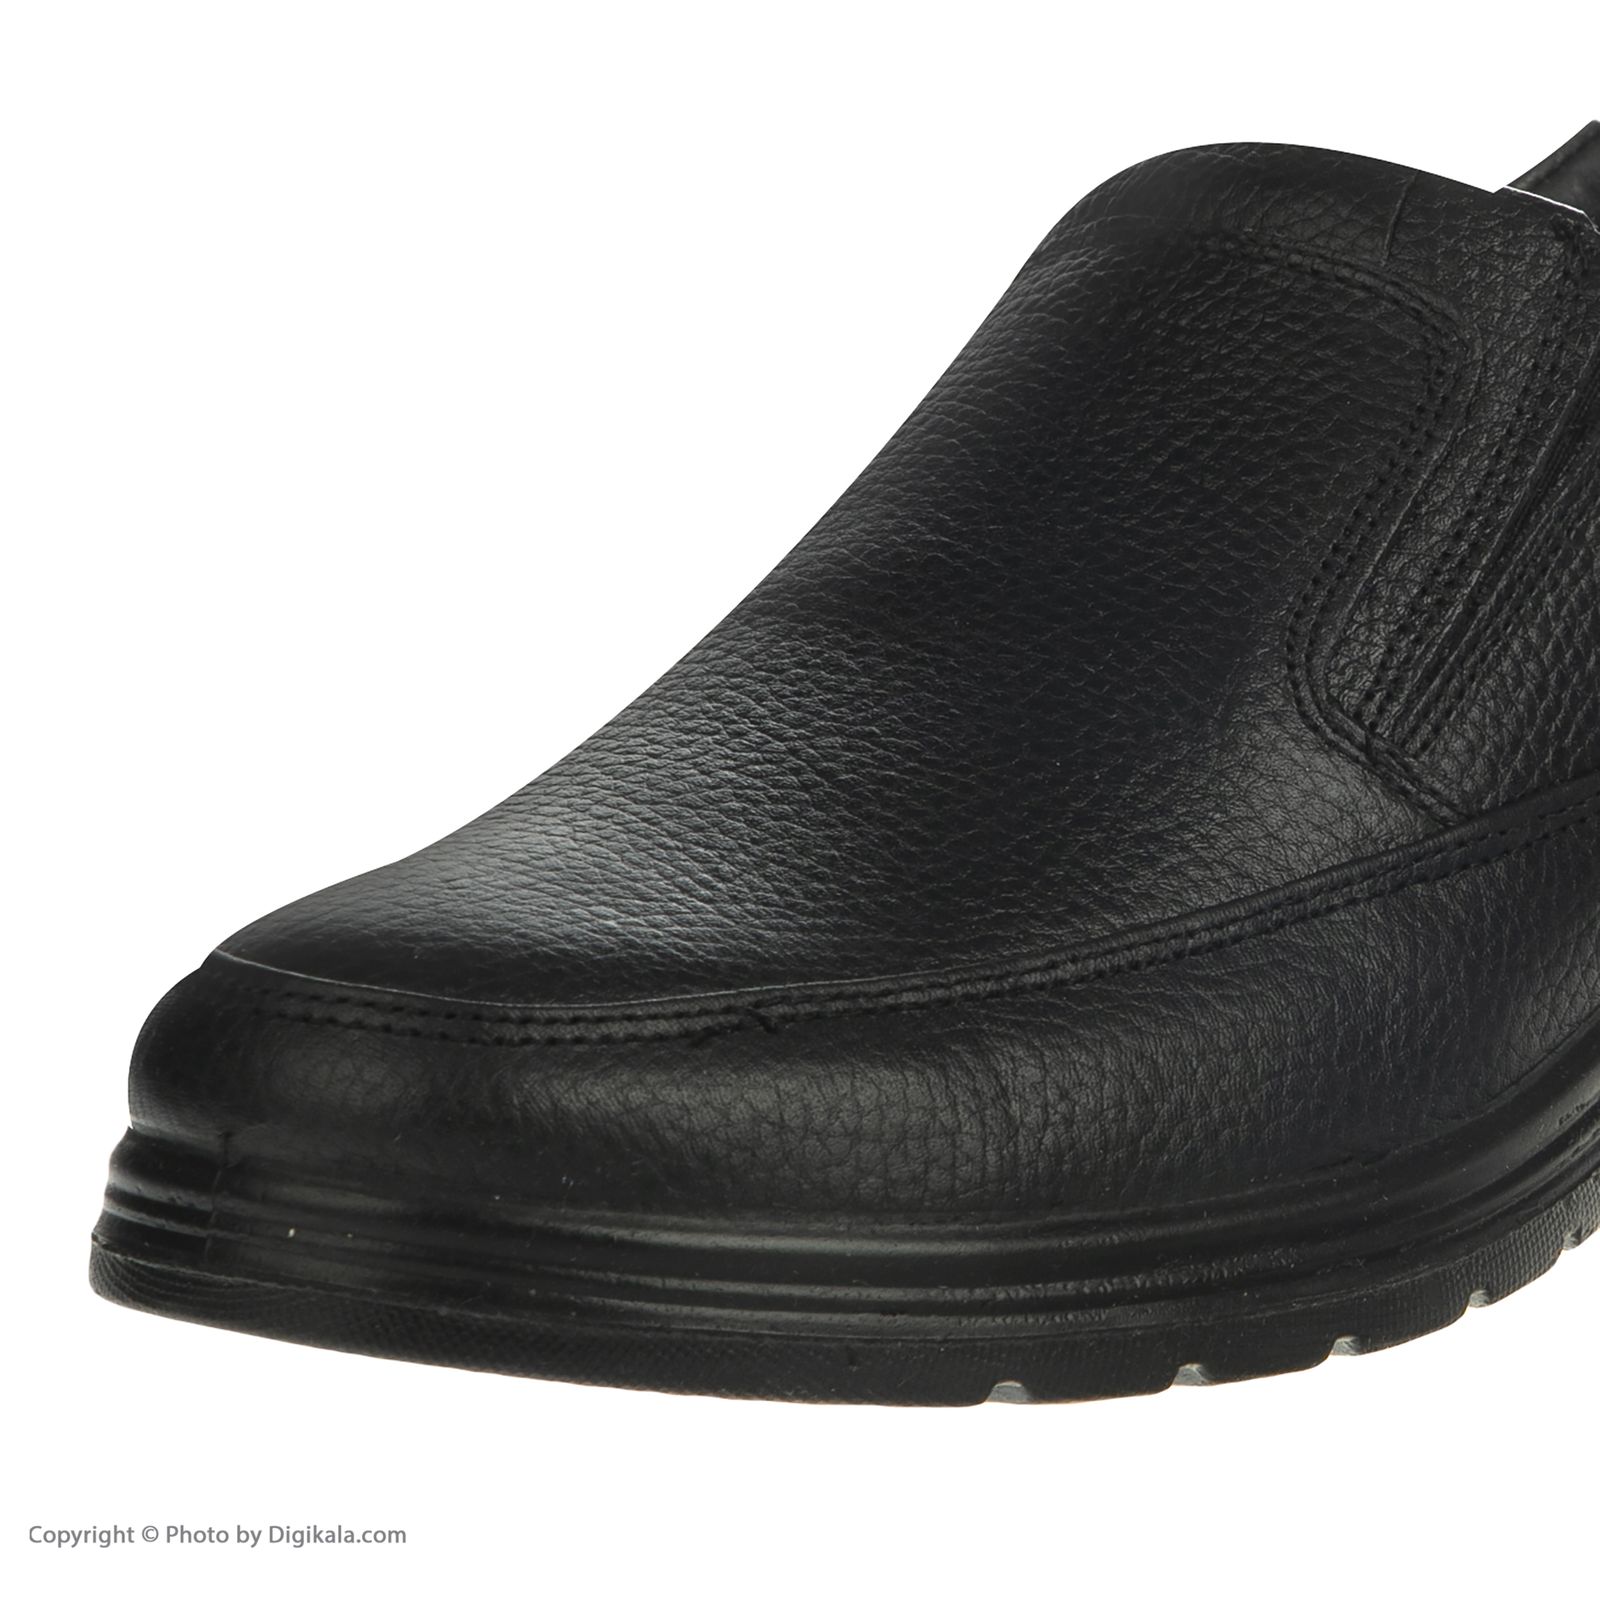 کفش روزمره مردانه شیفر مدل 7237a503101 - مشکی - 7